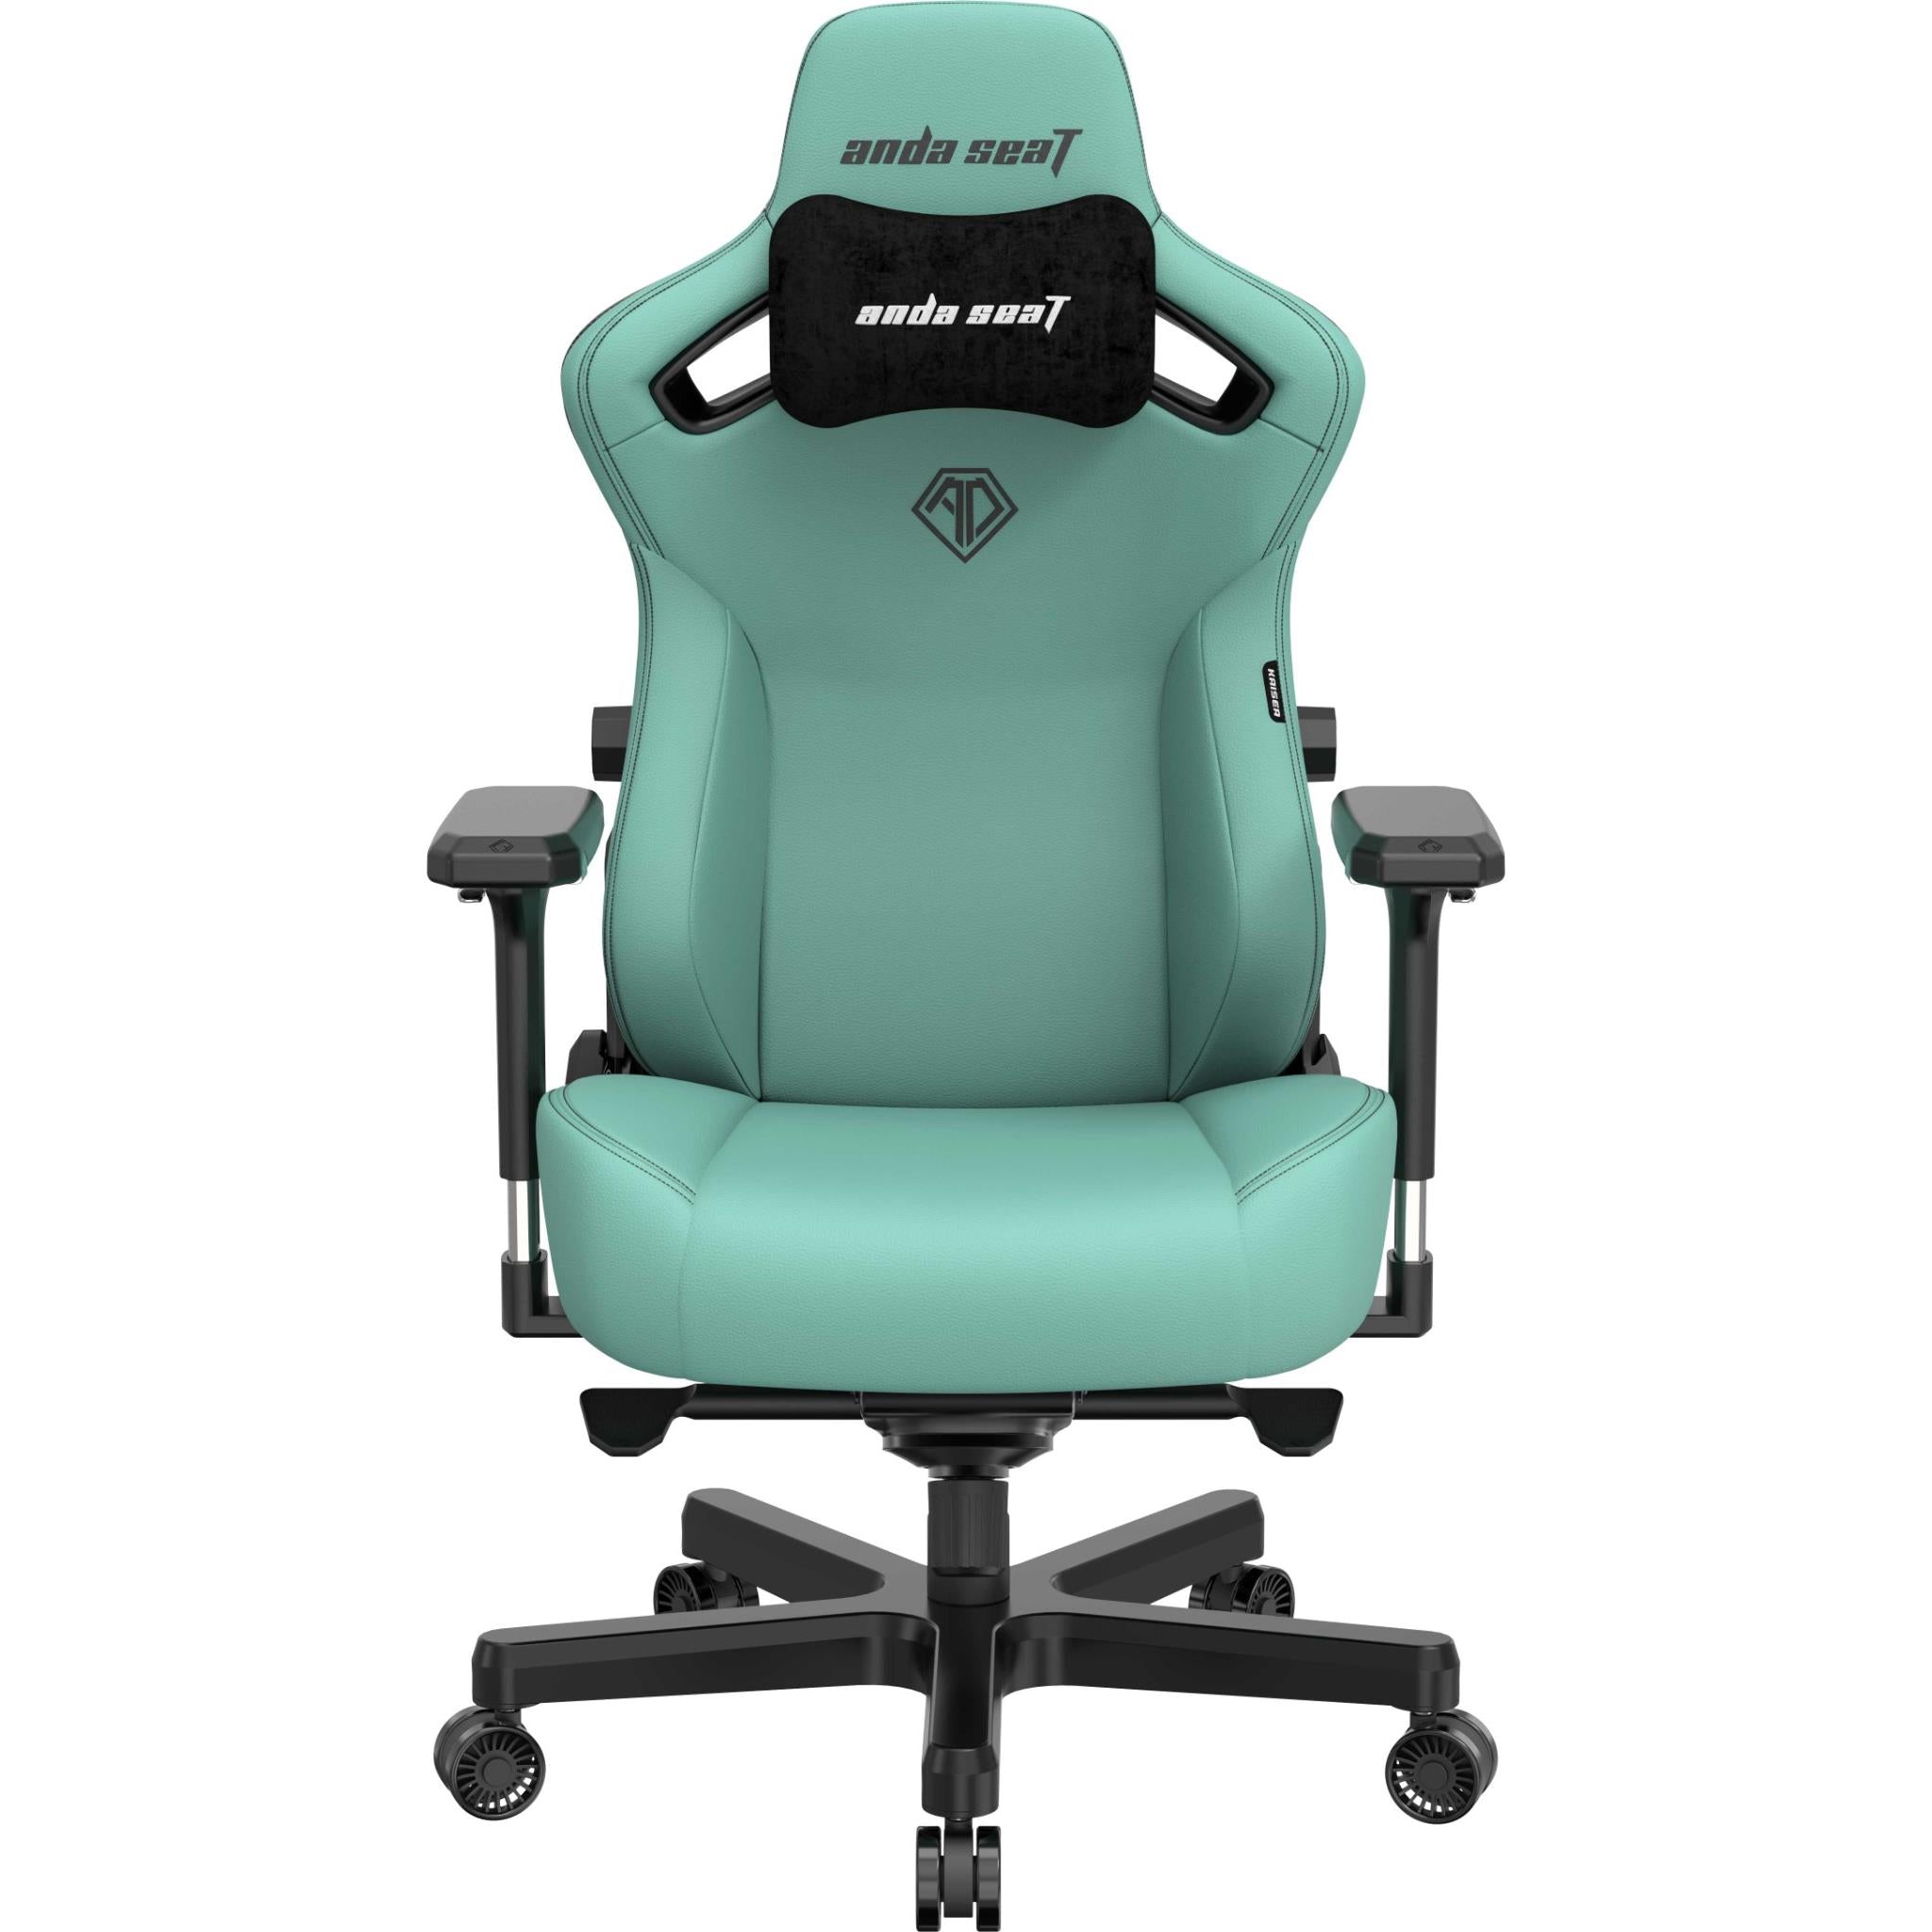 anda seat kaiser 3 series premium gaming chair green (xl)